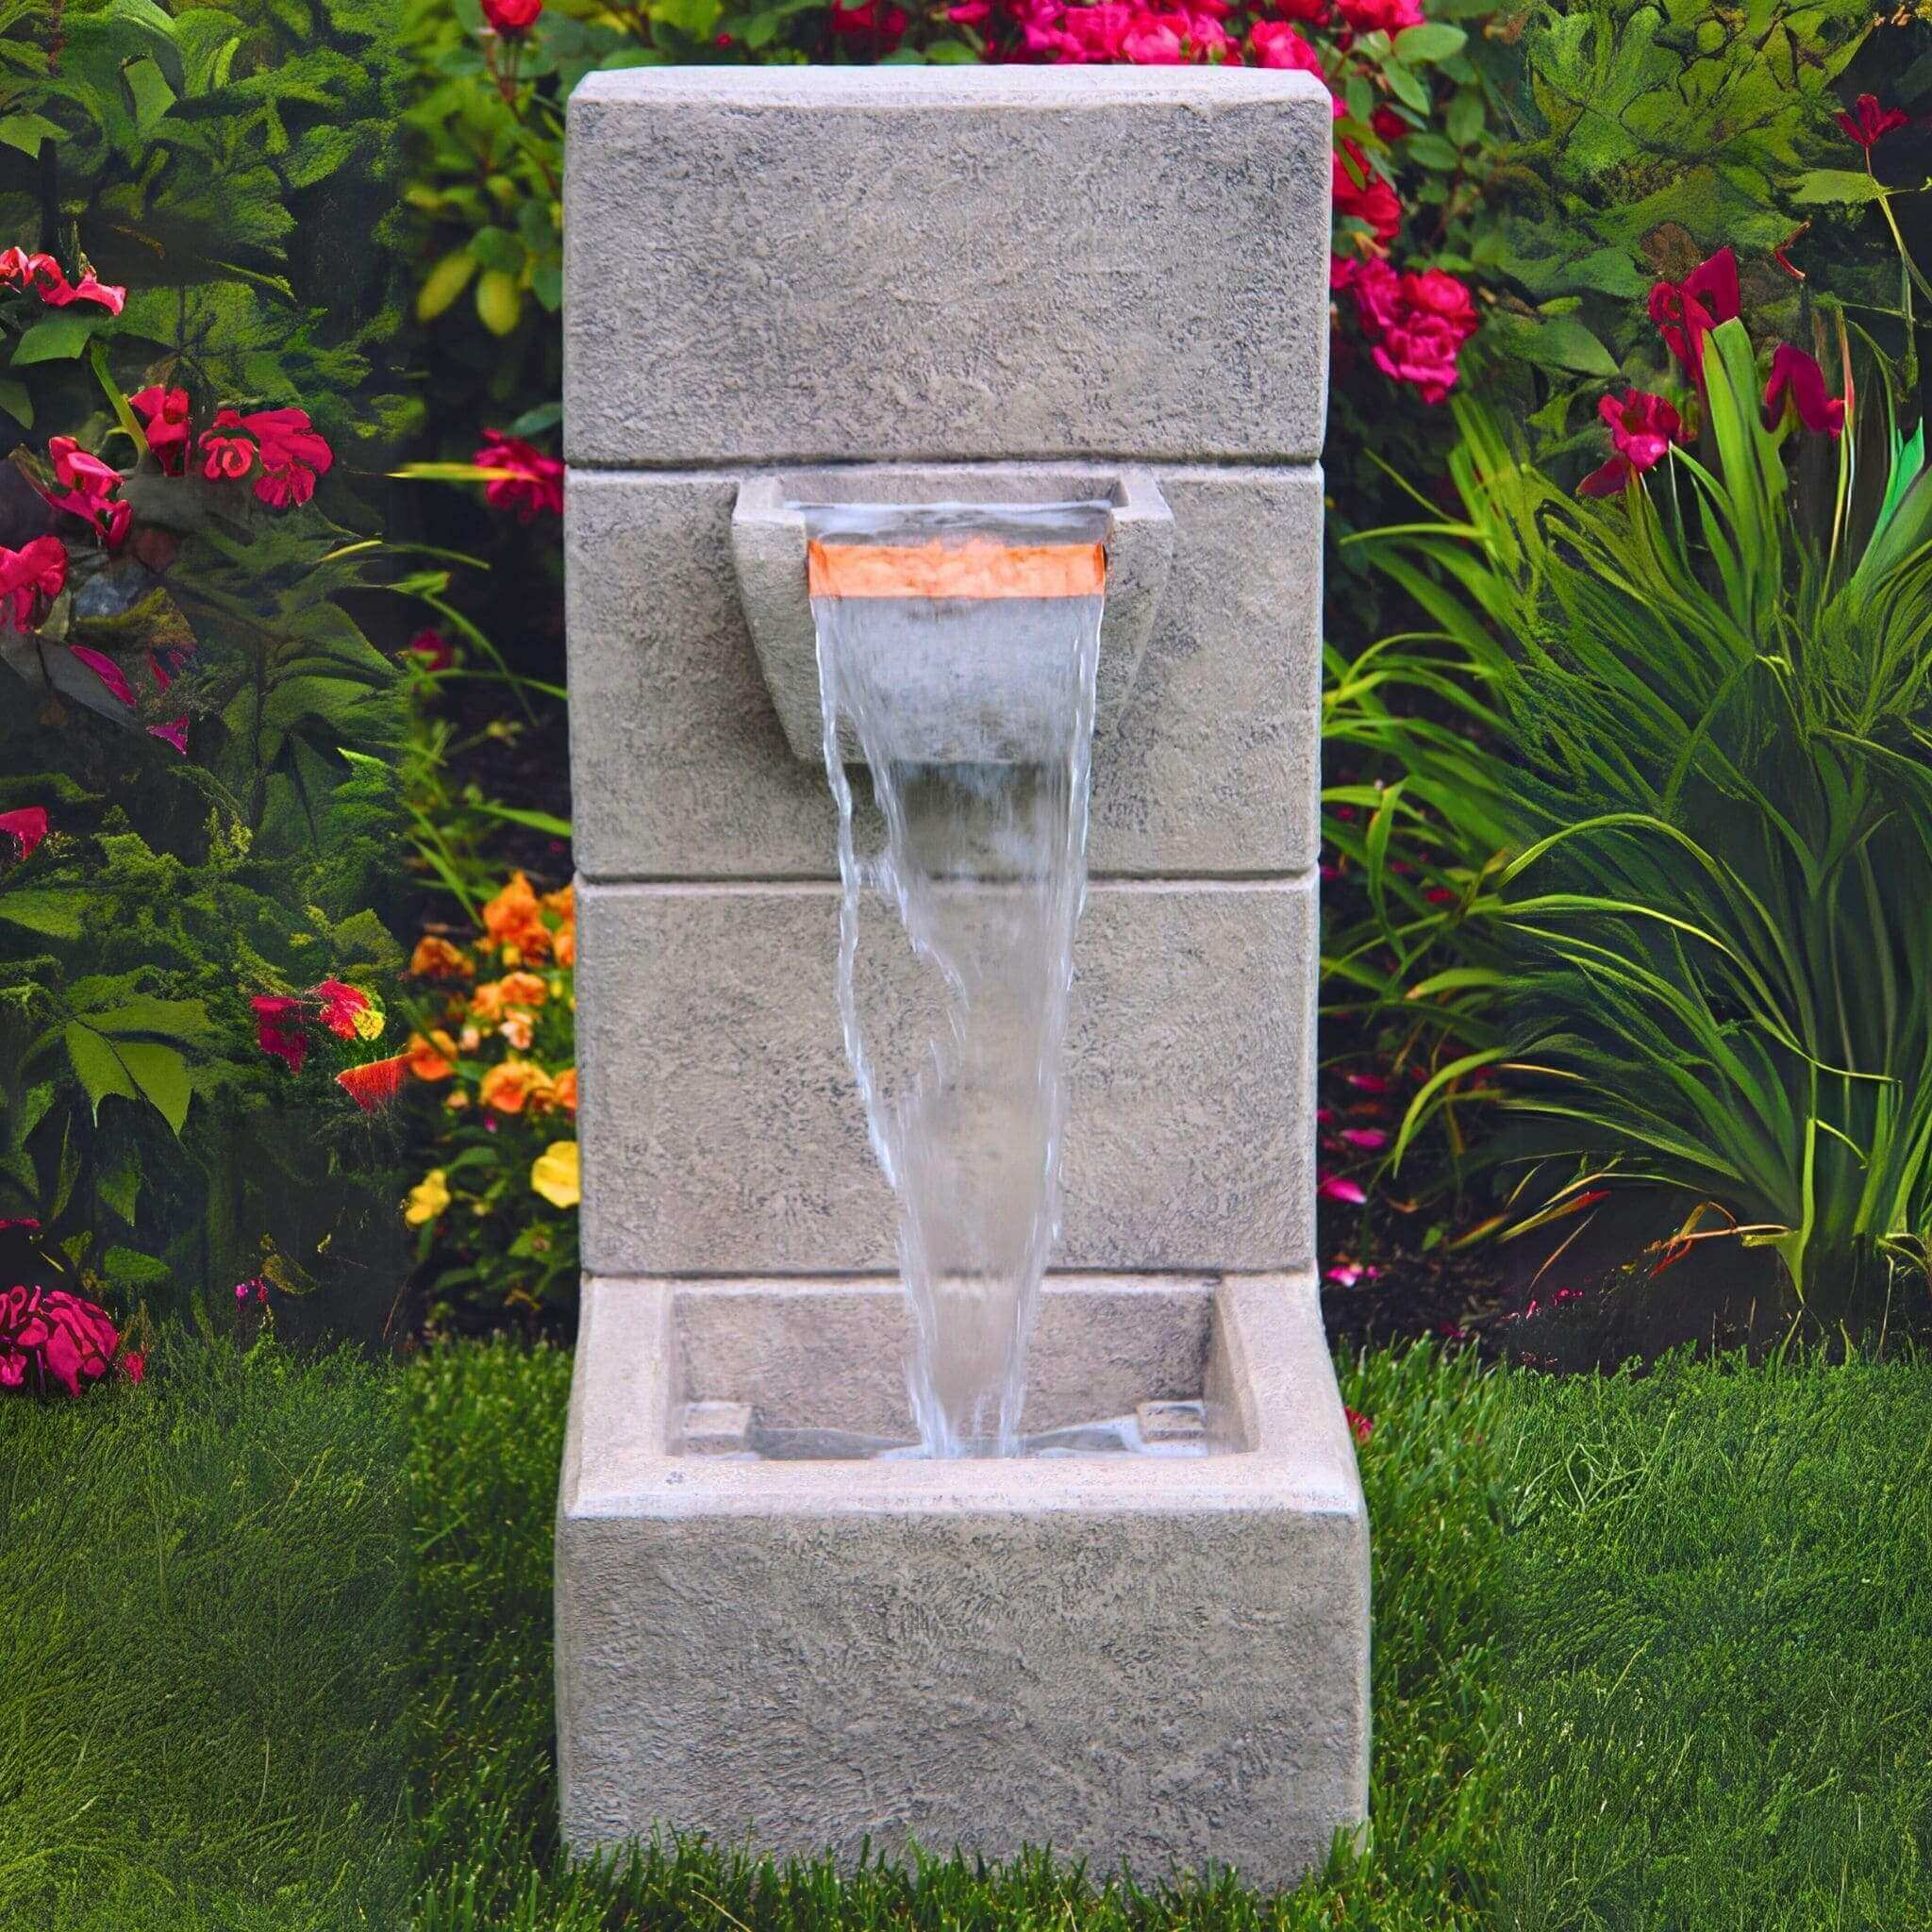 Anaconda Concrete Block Fountain w/Lights - Massarellis #3529